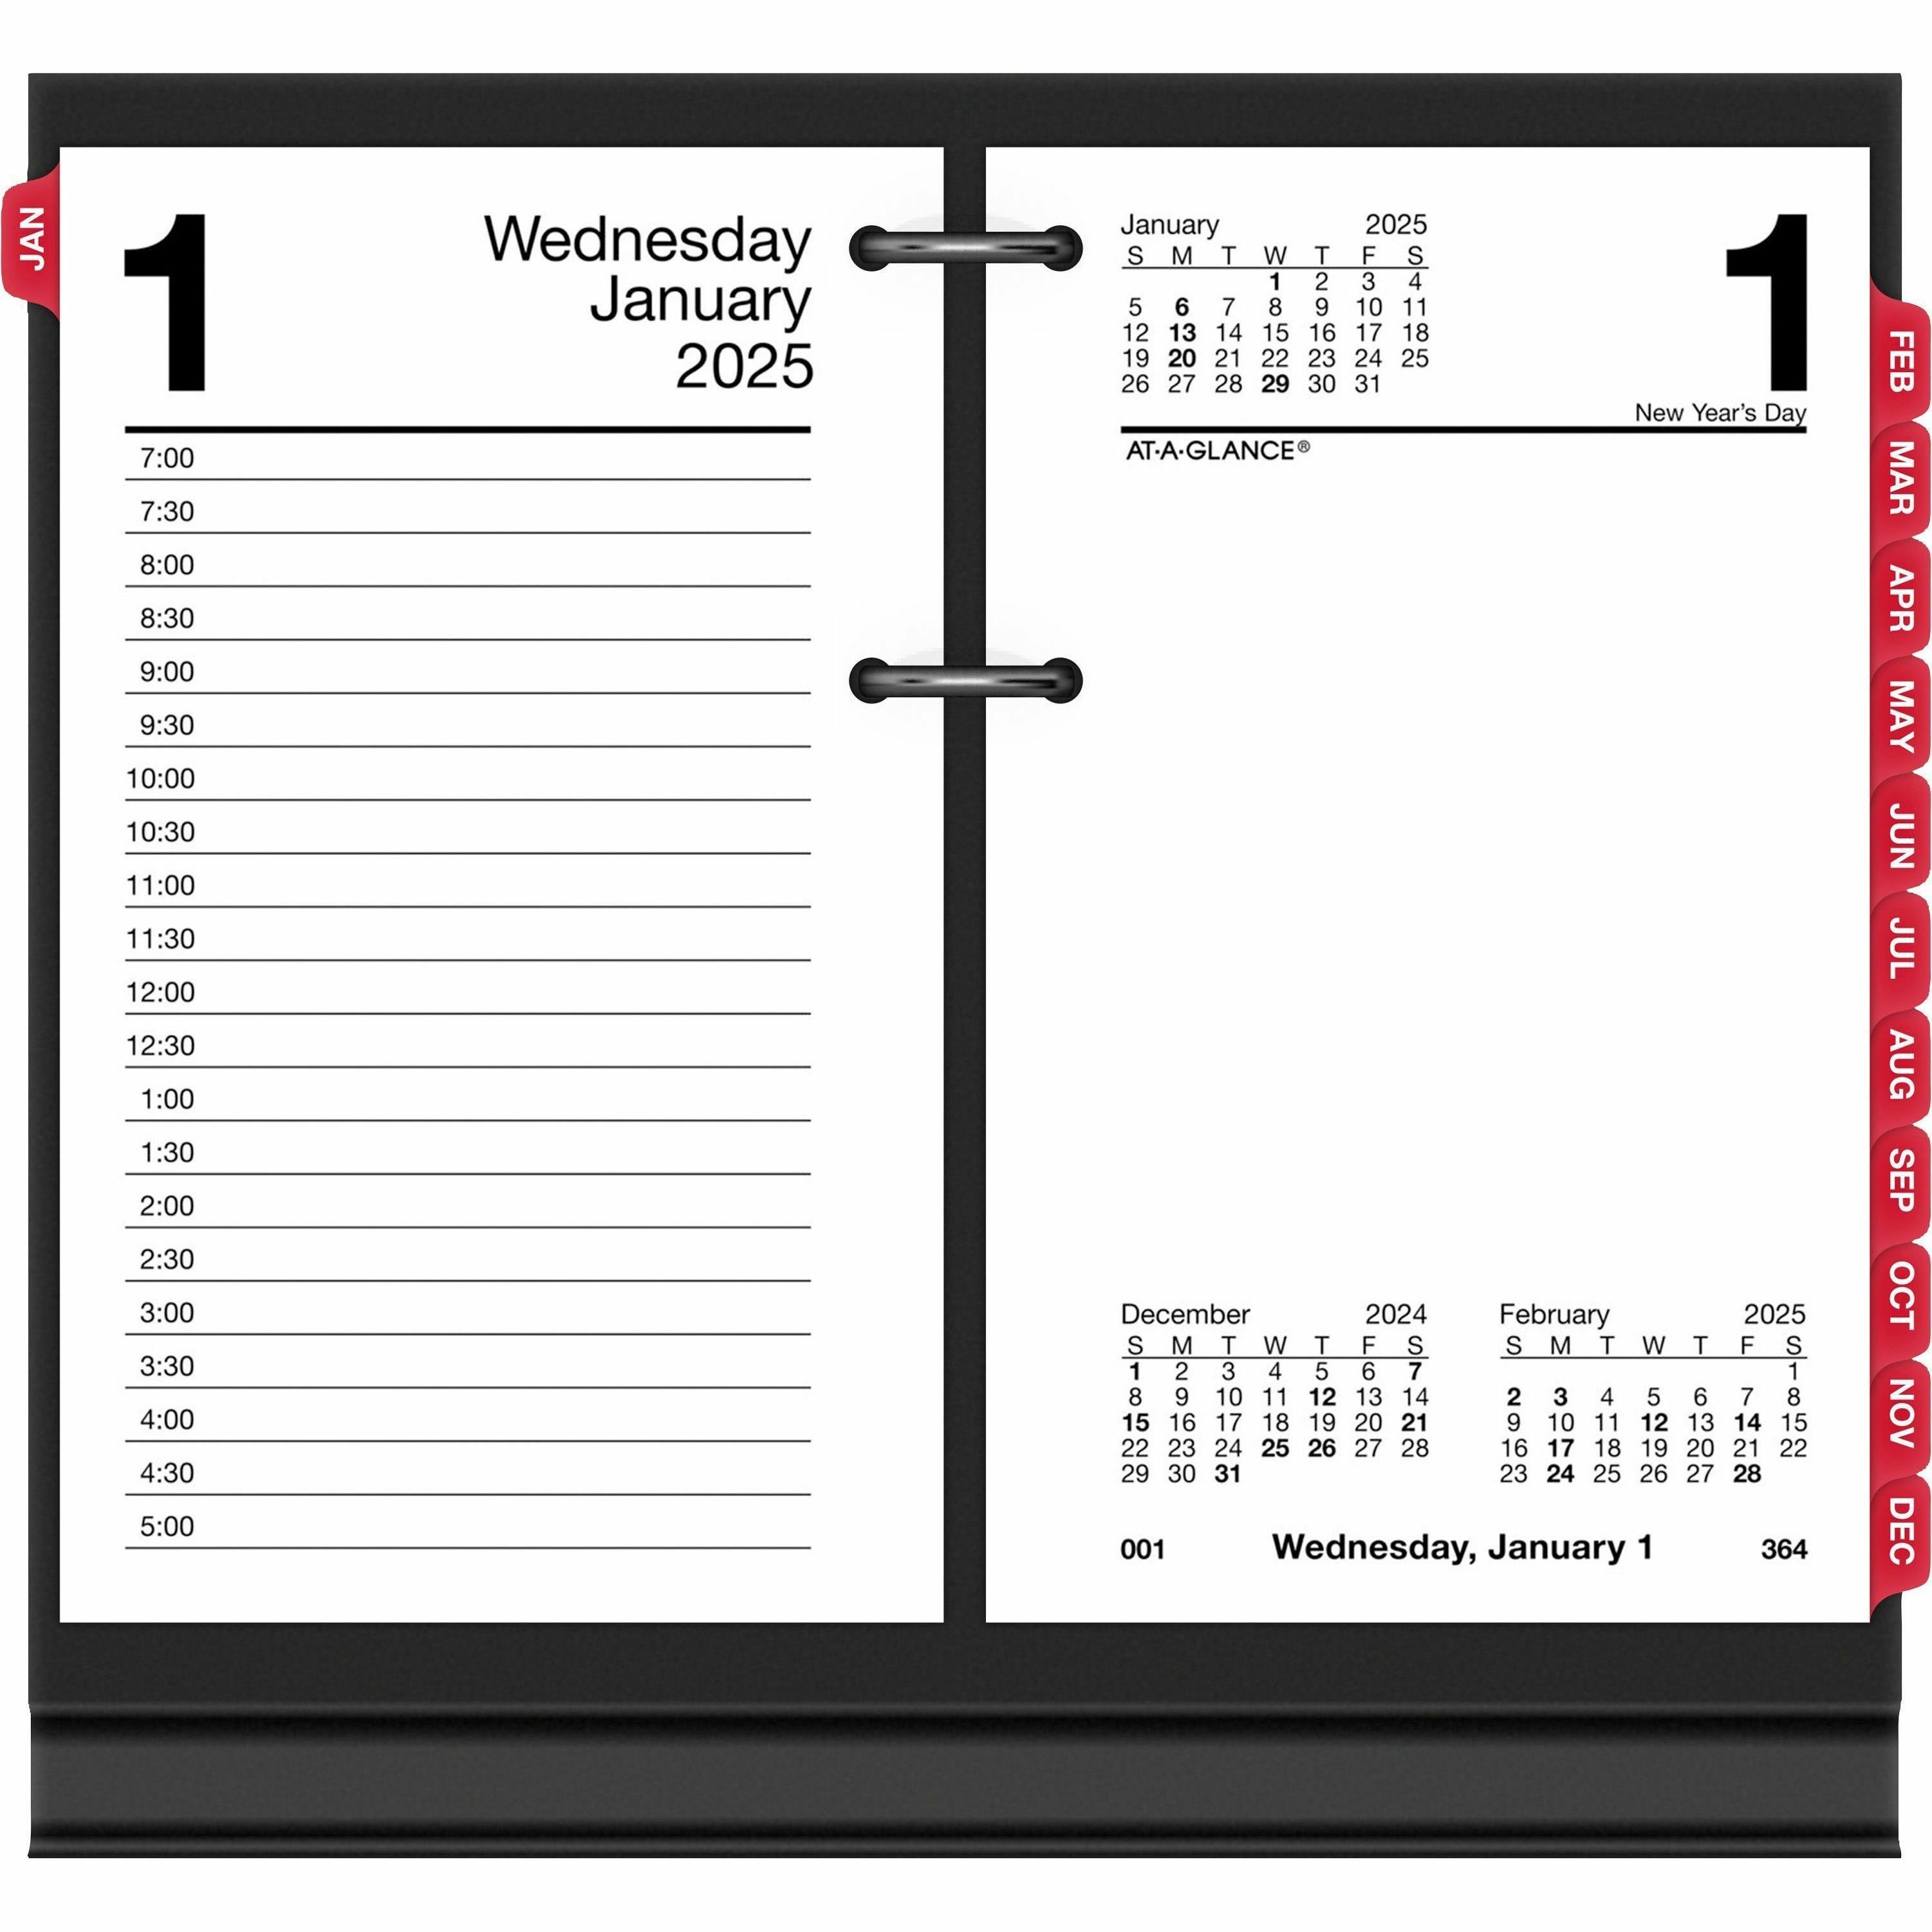 at-a-glance-daily-desk-calendar-refill-with-tabs-desk-calendar-refills-acco-brands-corporation